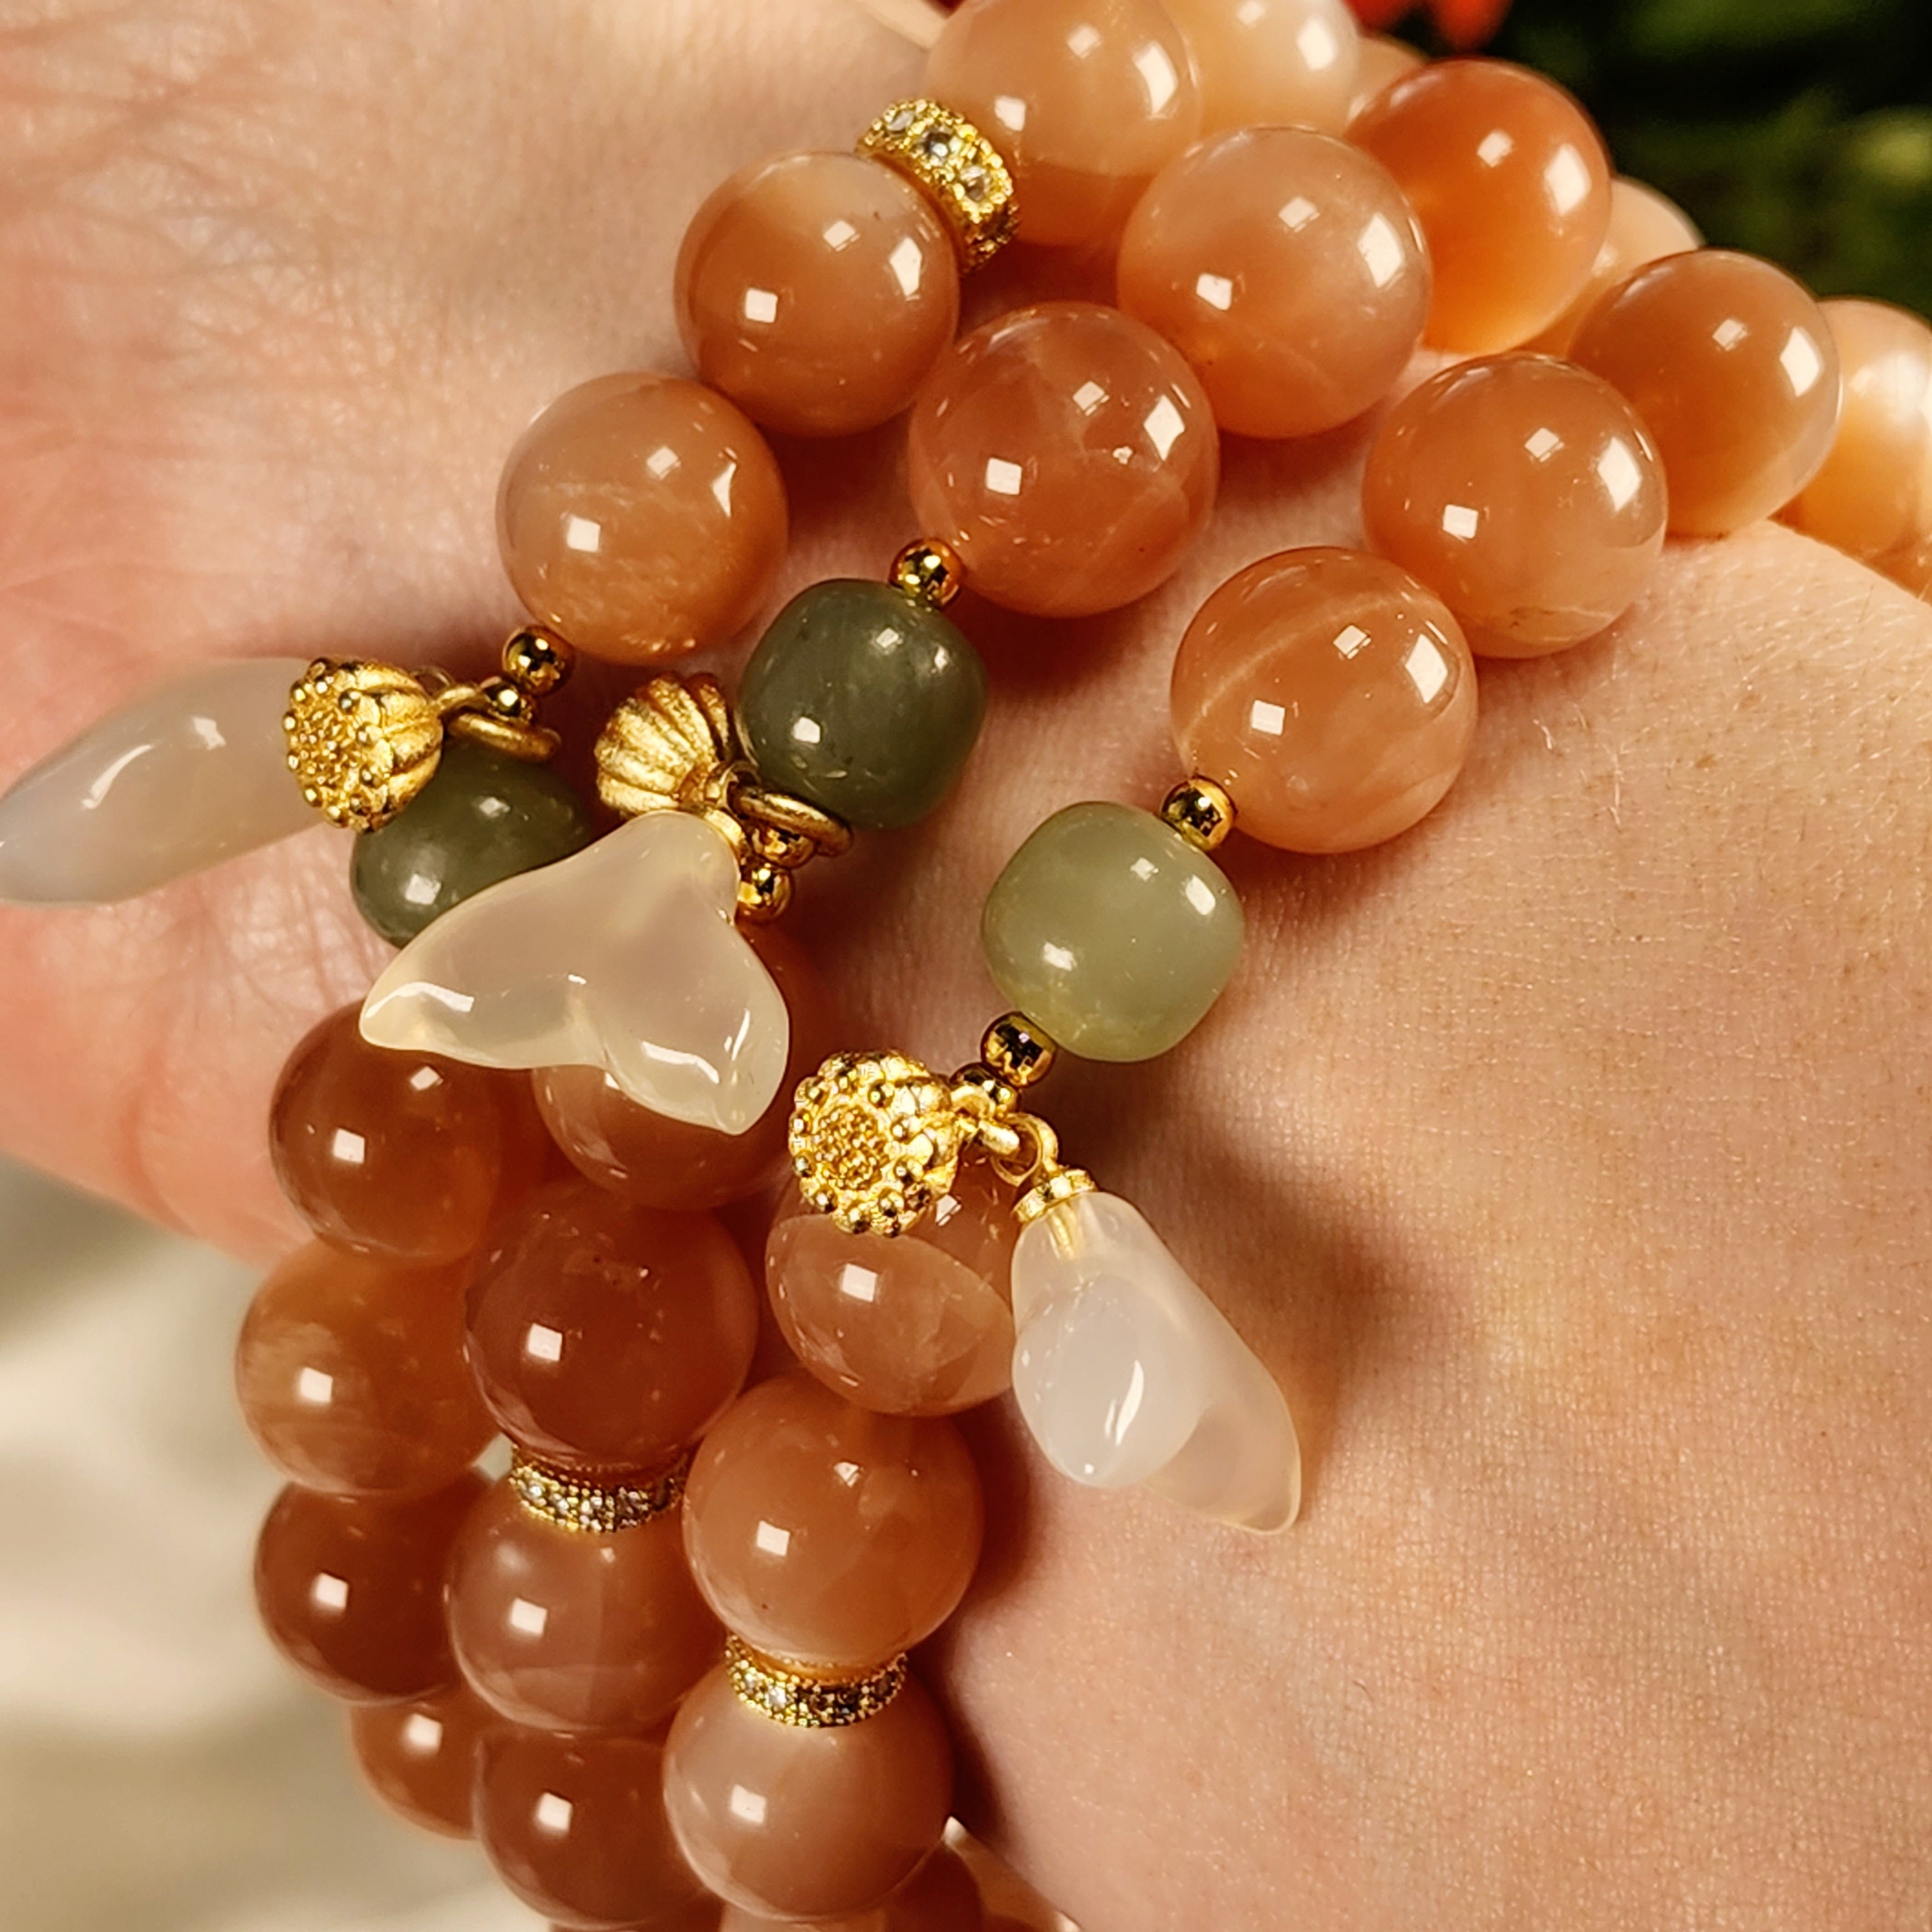 Peach Moonstone, Jade & Agate Bracelet (High Quality) for New Beginnings, Protection, Creativity & Manifestation